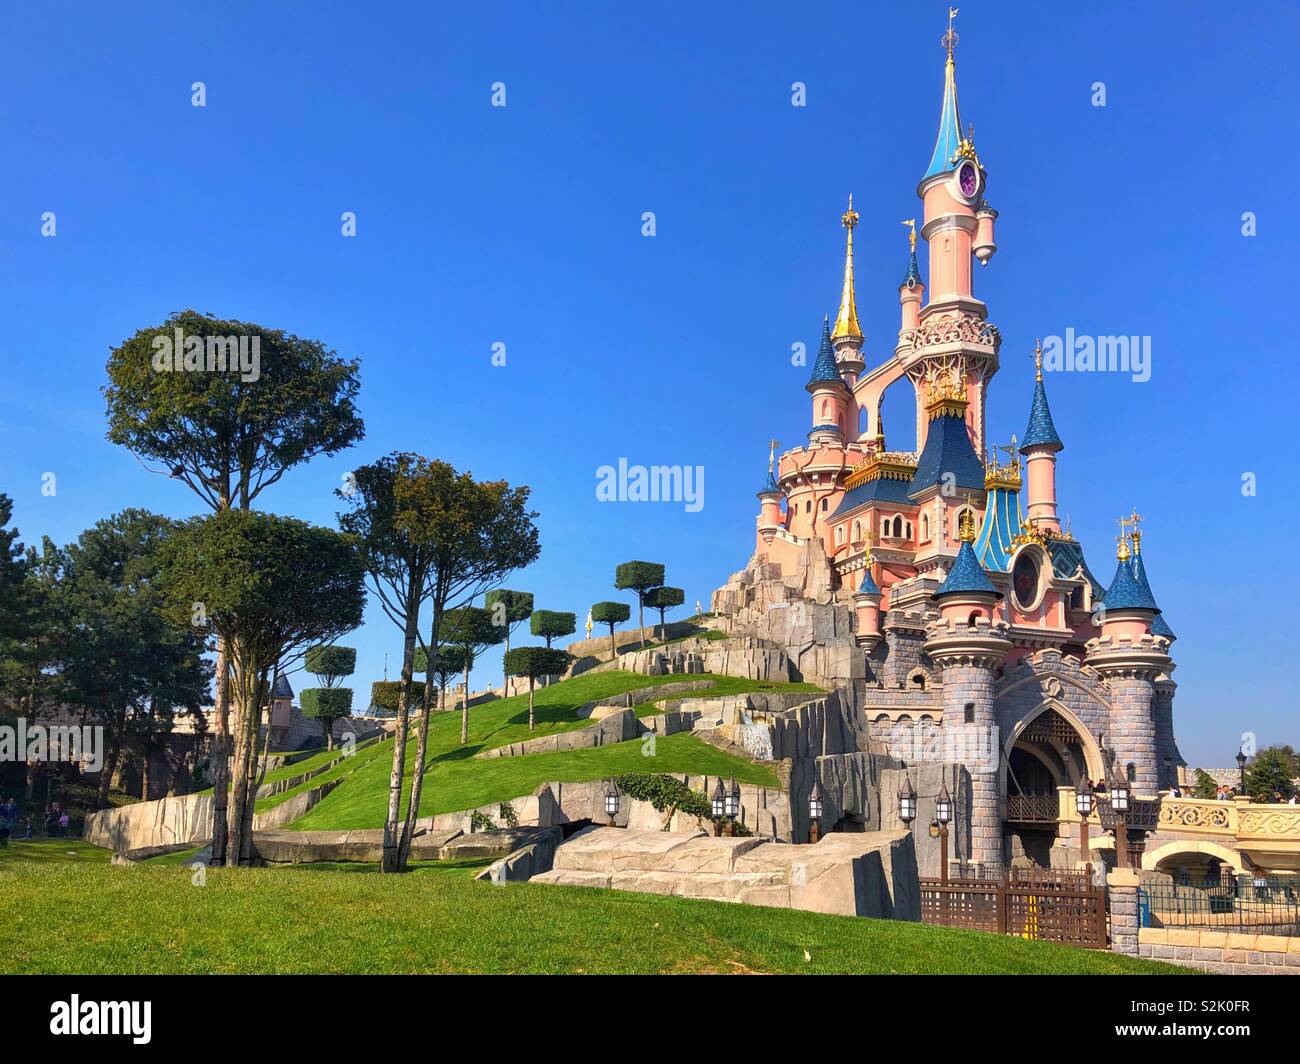 The magical kingdom Disney castle at Disneyland Paris, March. Stock Photo